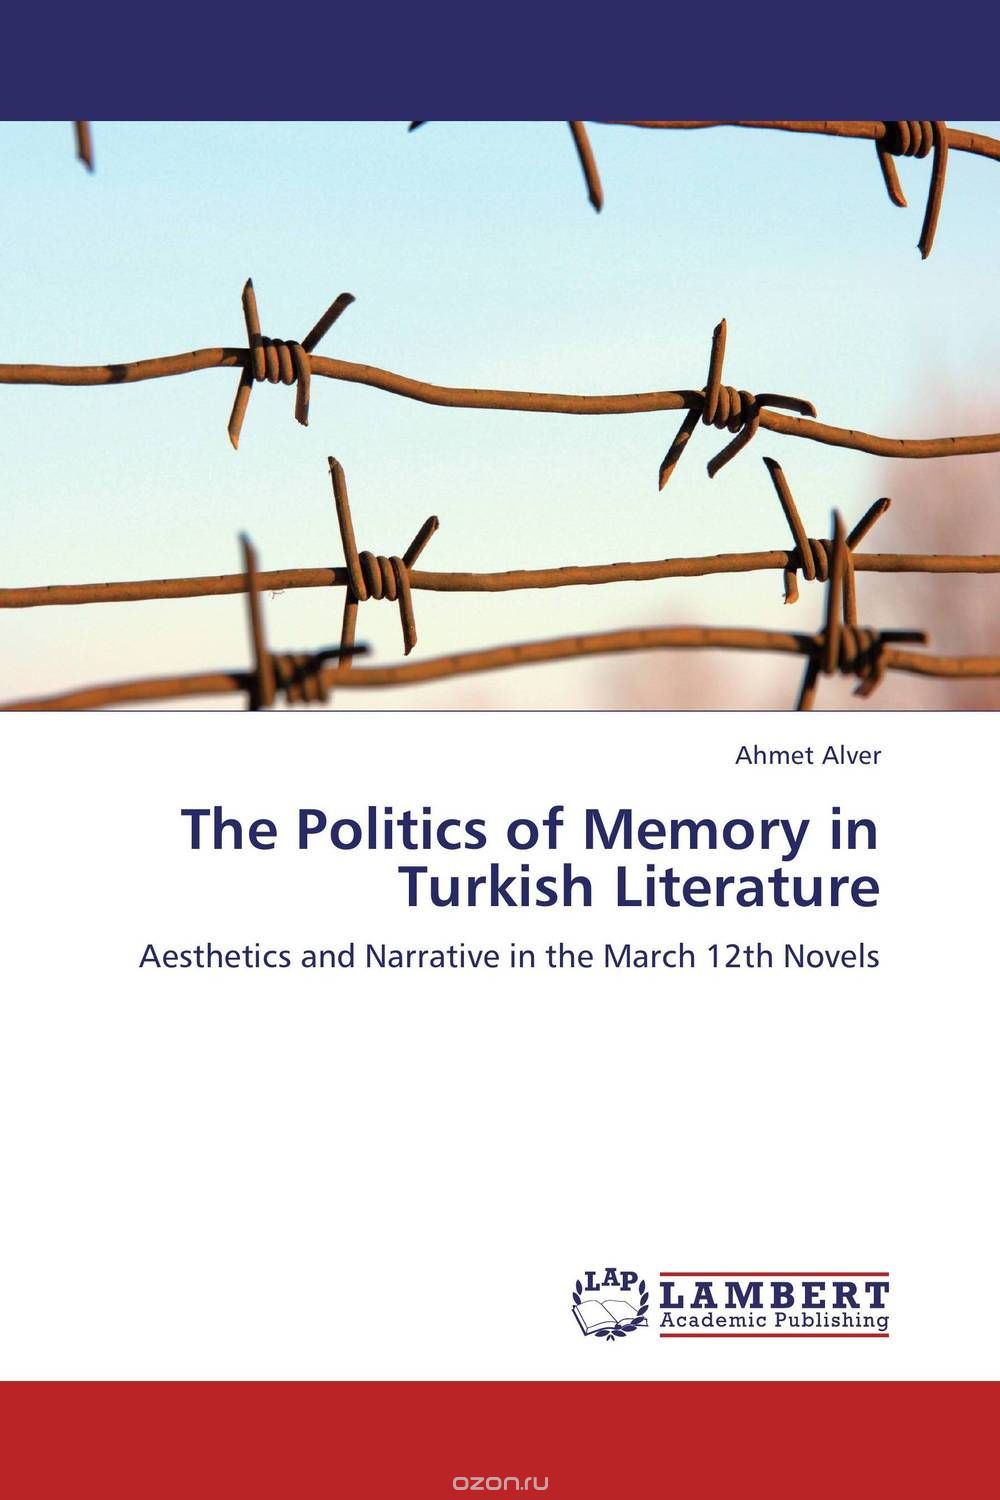 The Politics of Memory in Turkish Literature